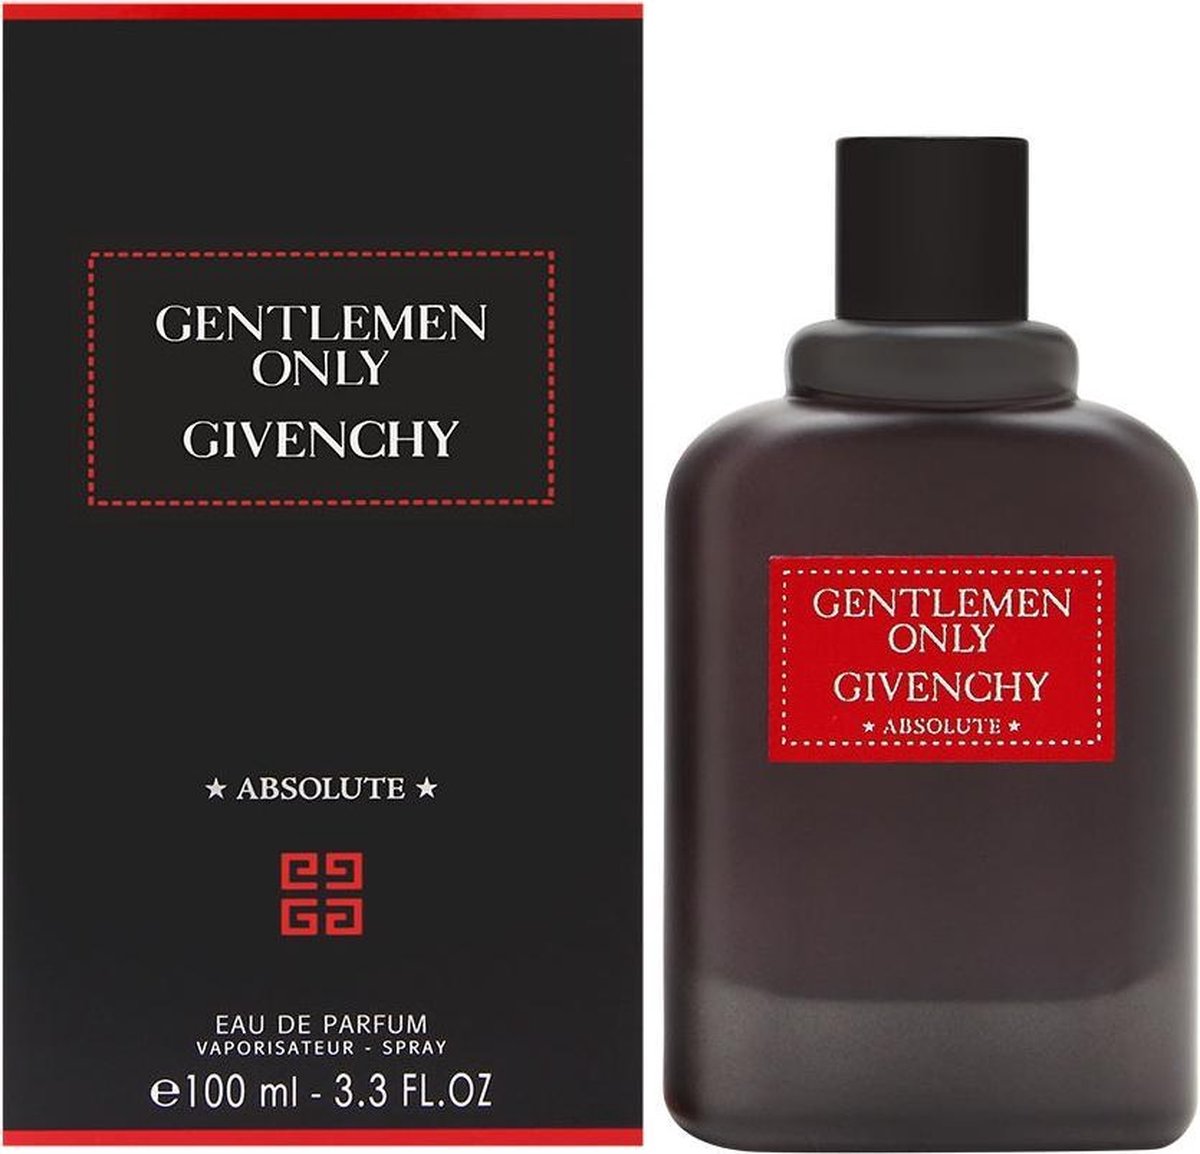 perfume gentlemen only givenchy precio